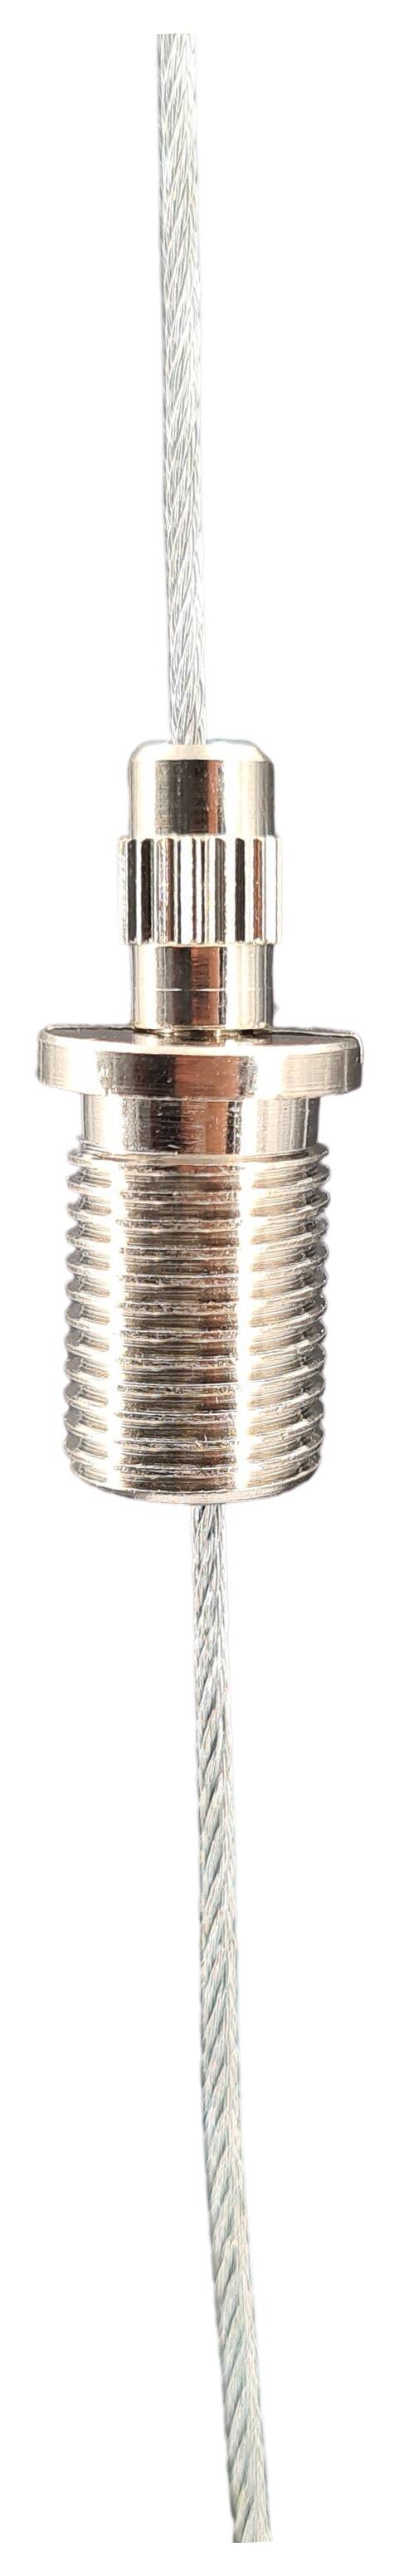 brass cableblocker with collar + cap 12x17 M10x1x15 male nickel